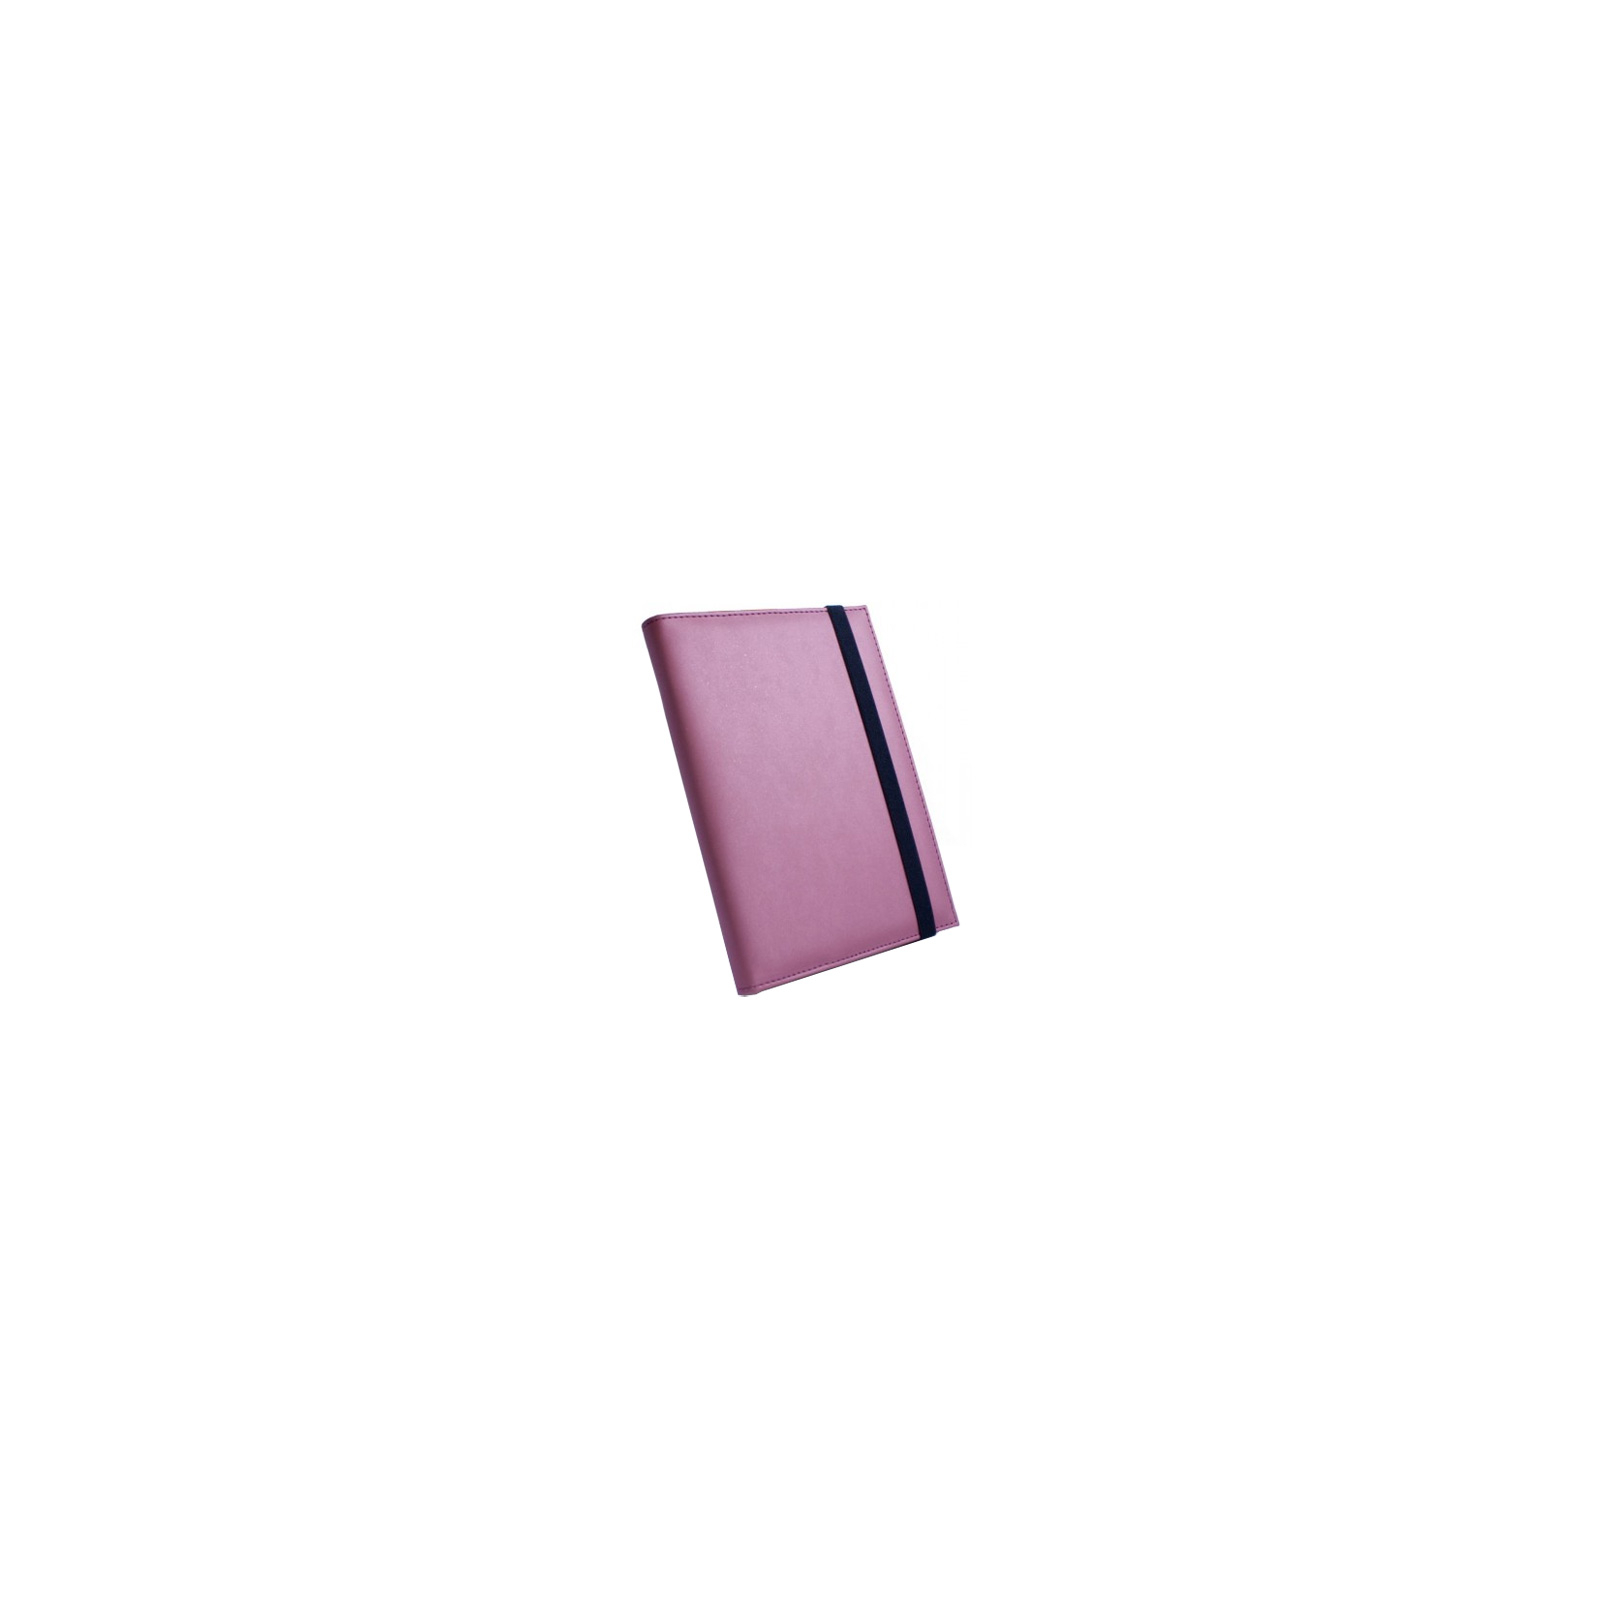 Чехол для электронной книги Tuff-Luv 6 Slim Book Pink (A7_22)